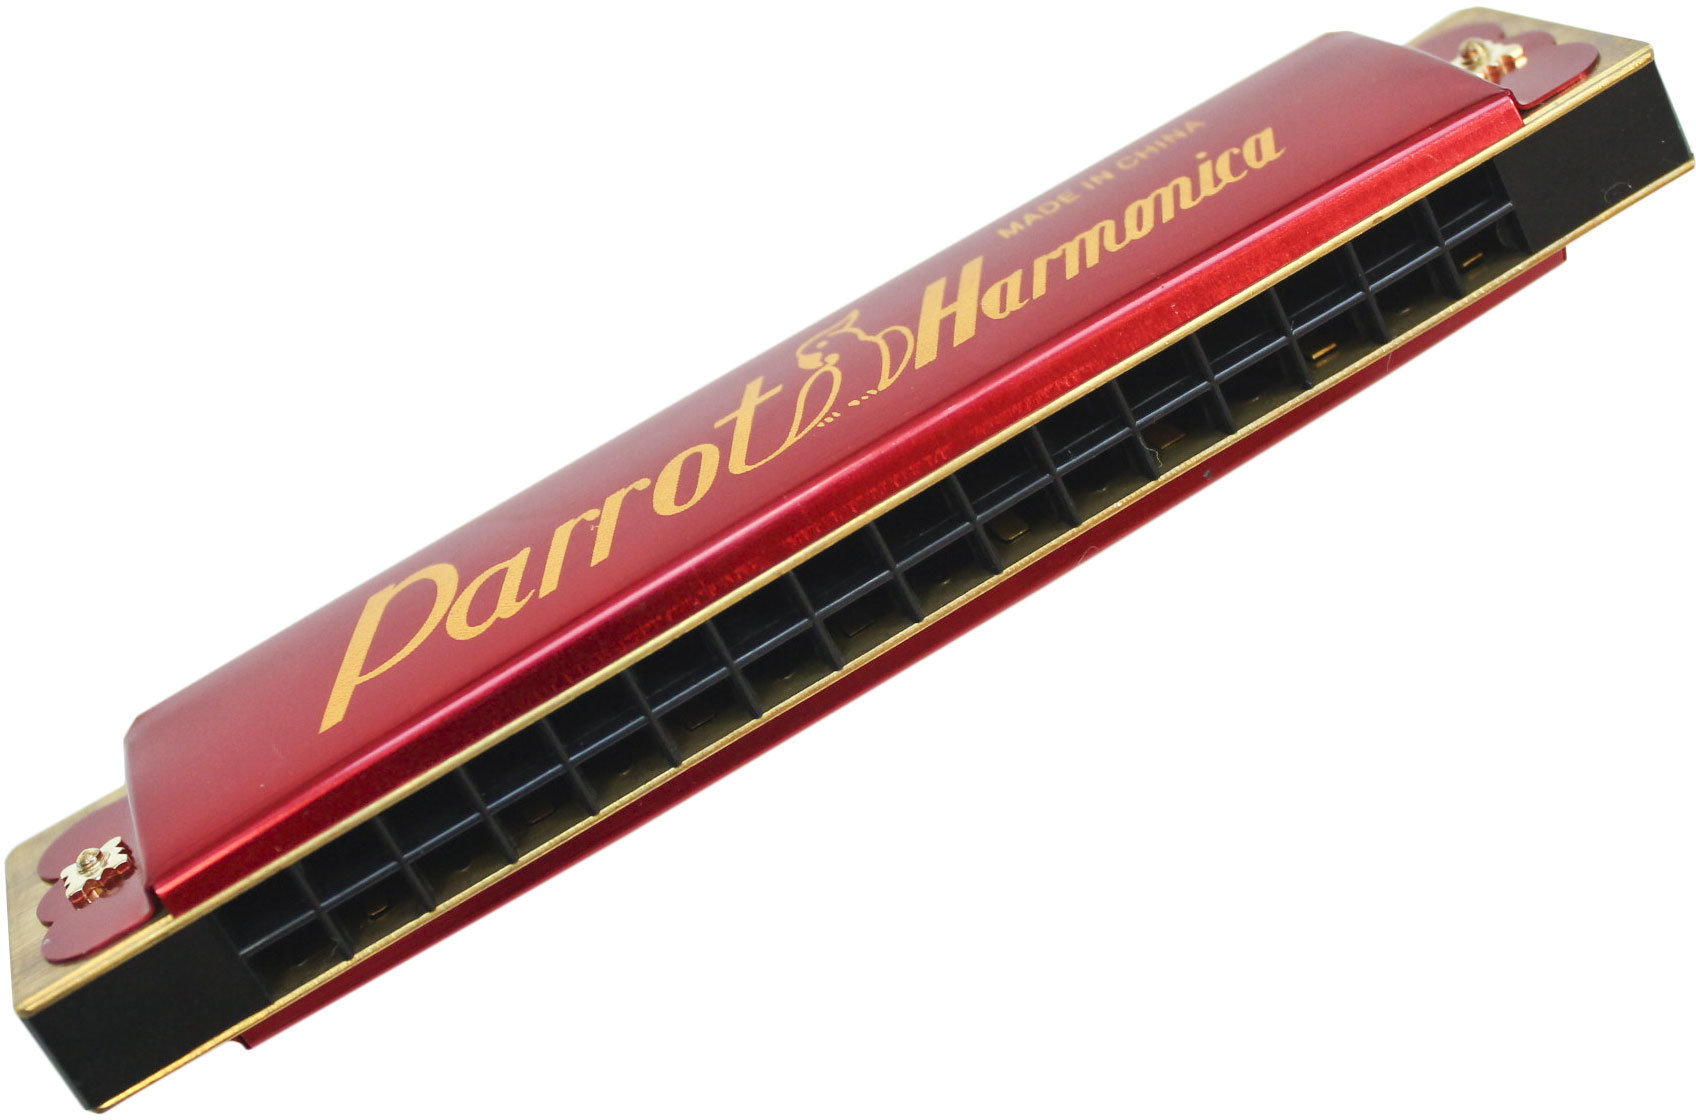 Diatonic harmonica Parrot HD 16 1 A